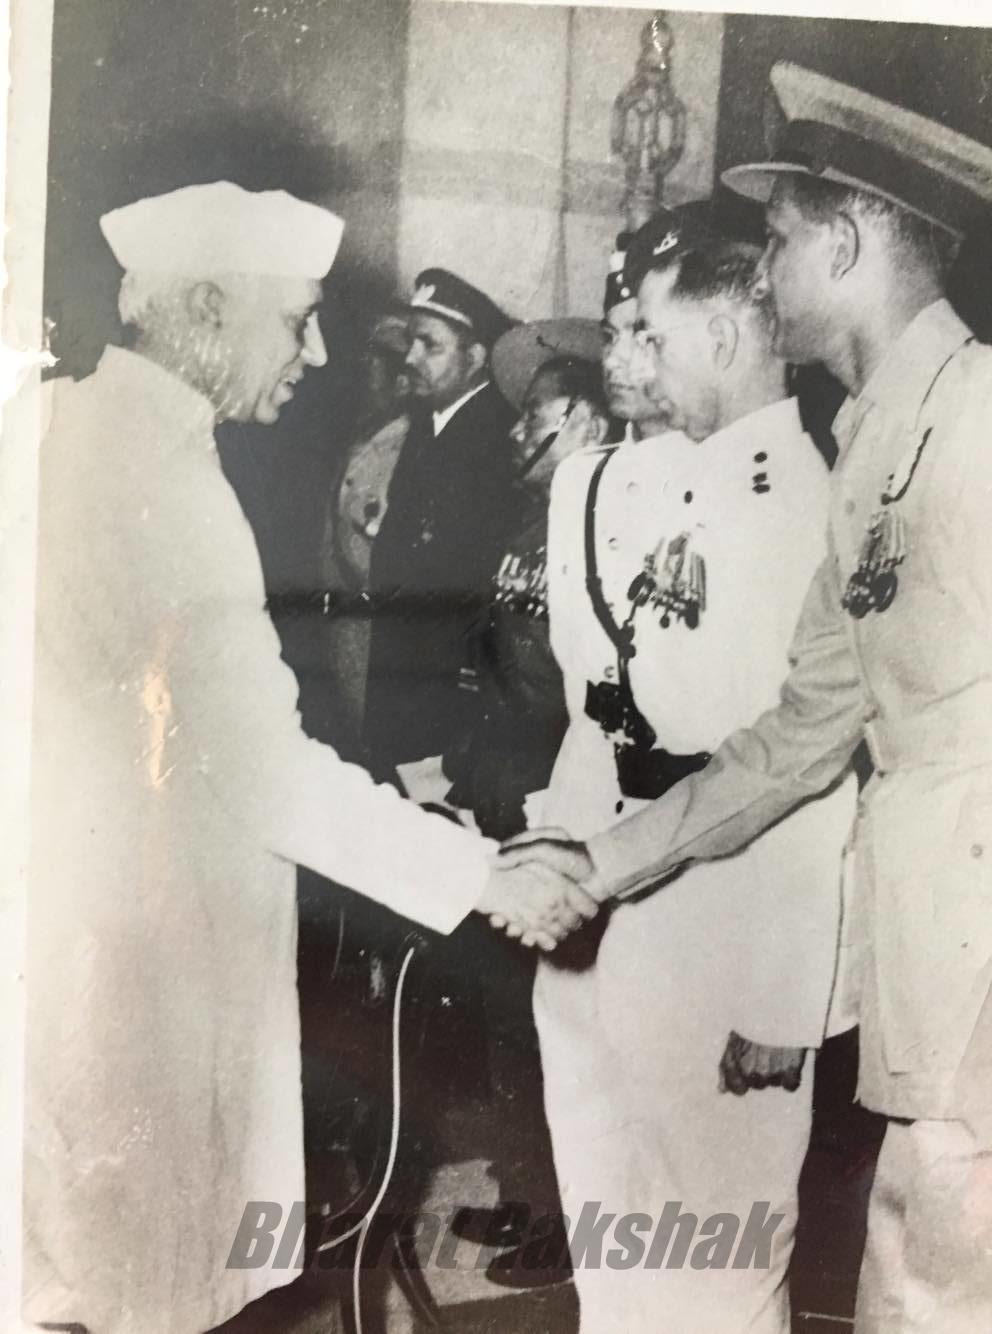 Pandit Nehru congratulating Warrant Officer Paddington.